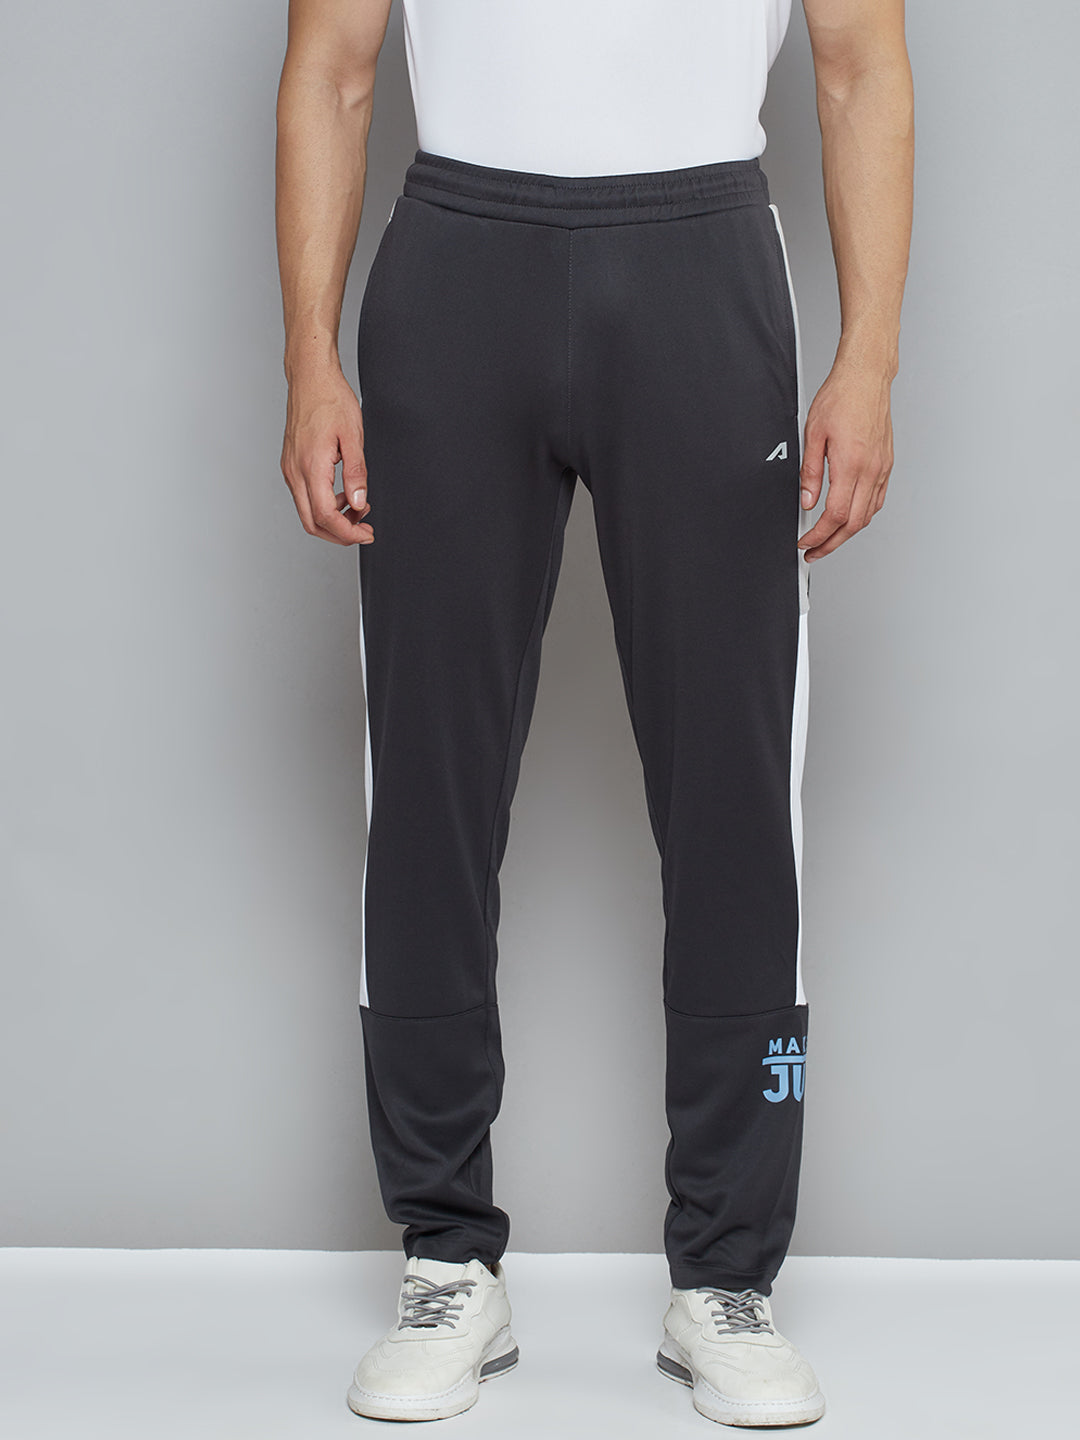 Sweatpants for Men Elastic Waist Drawstring Pencil Pants Casual Lightweight Track  Pants for Workout Running Jogging - Walmart.com